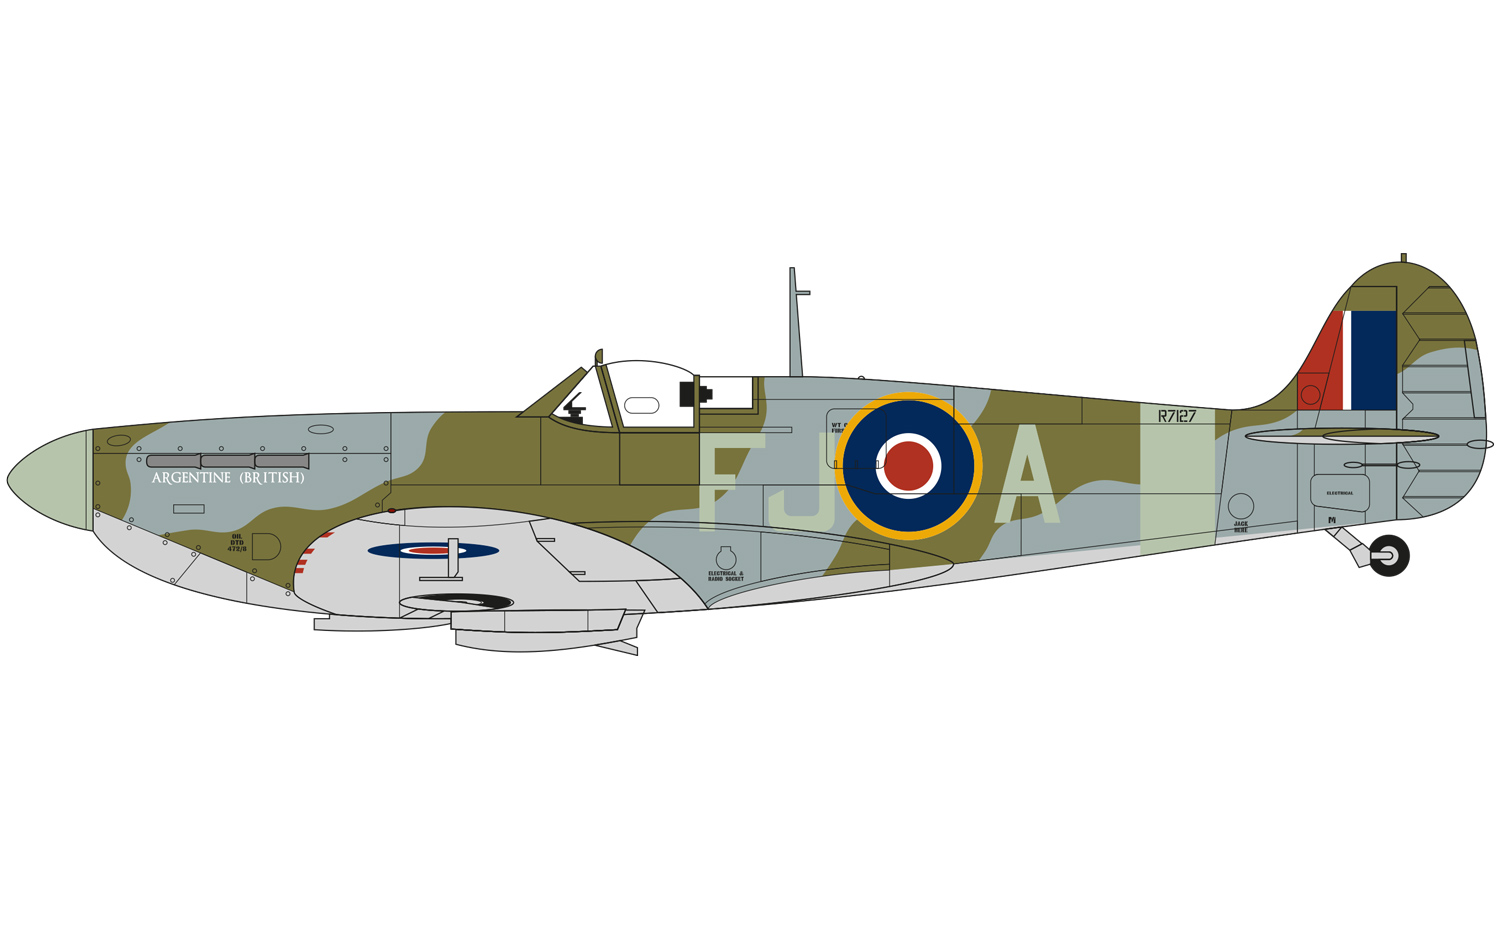 Supermarine Spitfire Mk.Va, 164. letka Argentina (British), Royal Air Force Peterhead, Aberdeenshine, Skotsko, Duben-září 1942